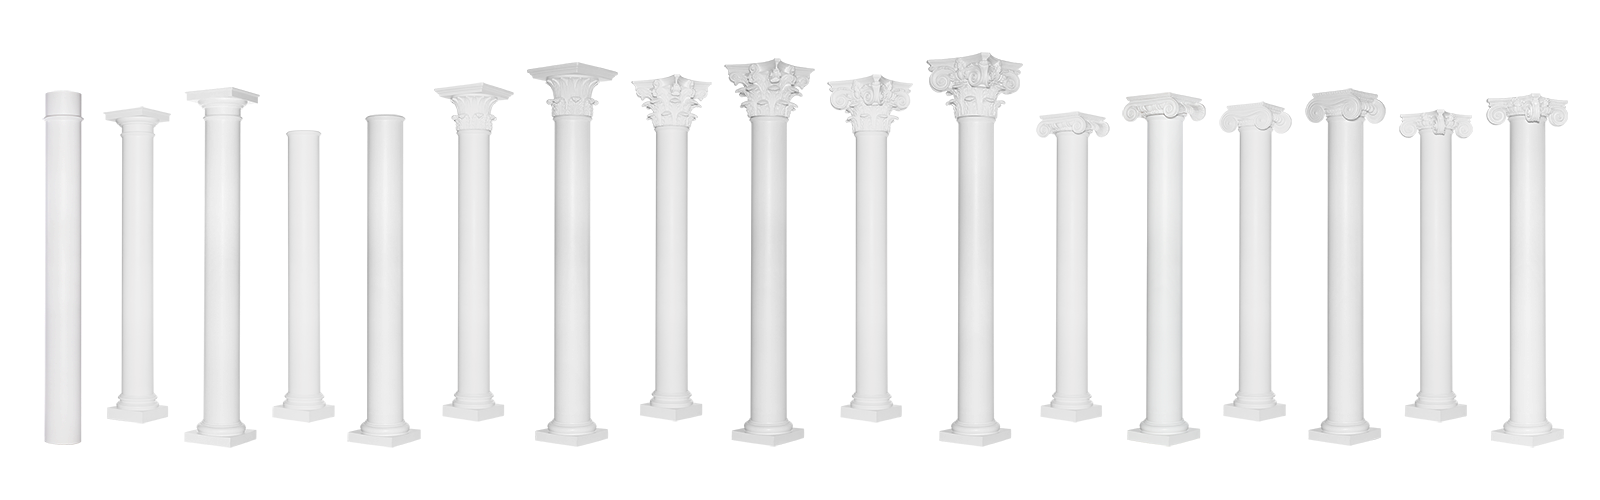 Round Fiberglass Columns with Straight, Smooth Shafts!